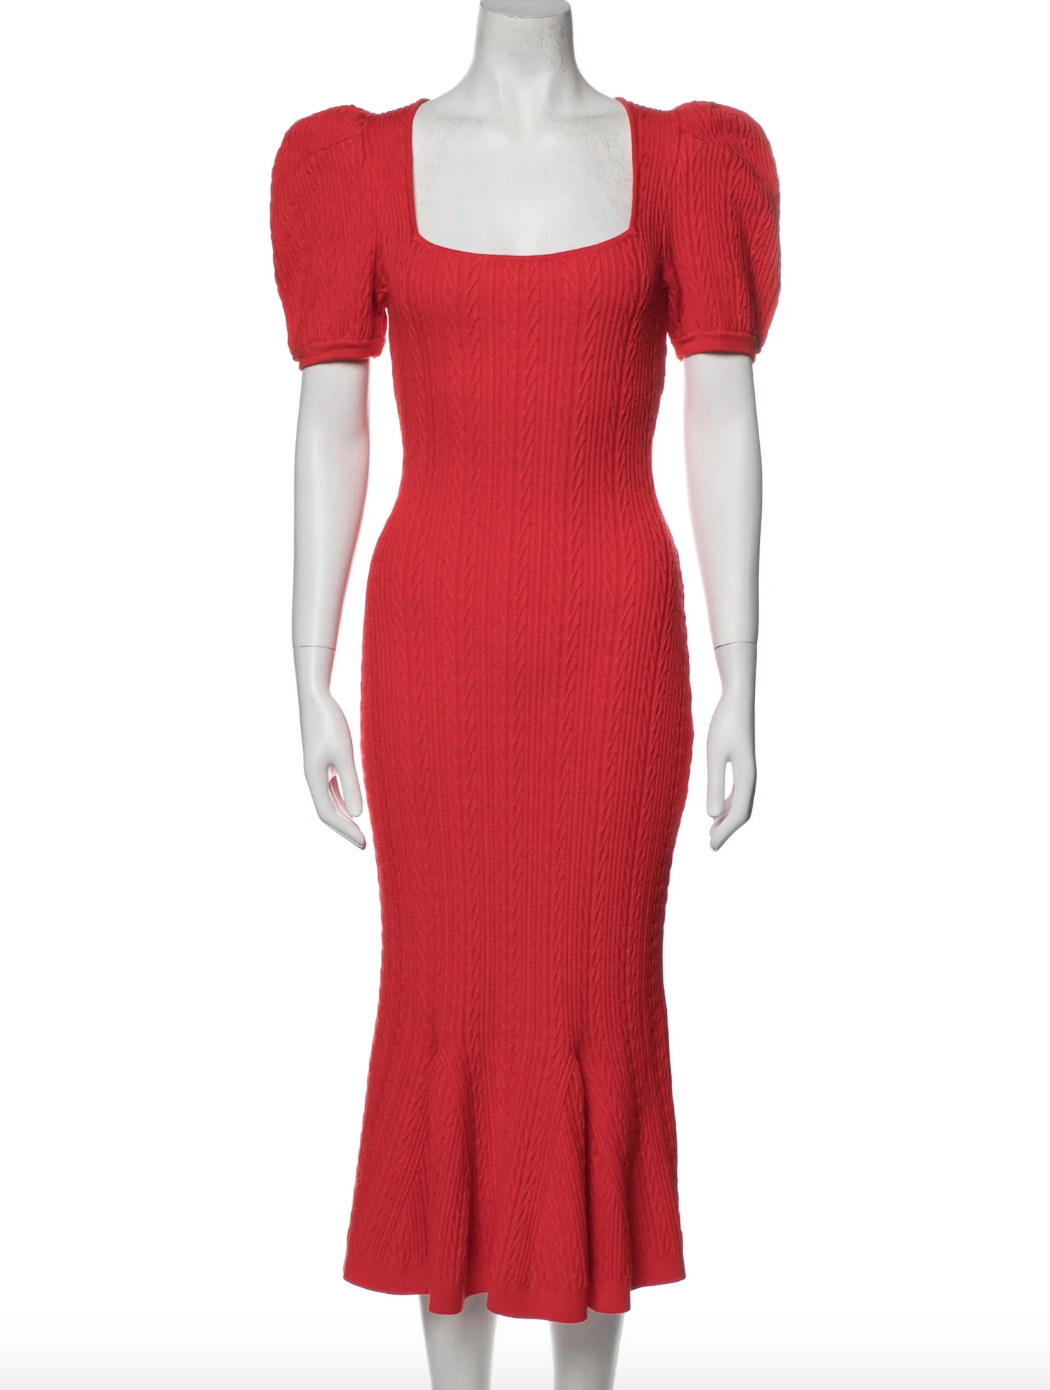 Emily Simpson's Red Knit Midi Dress